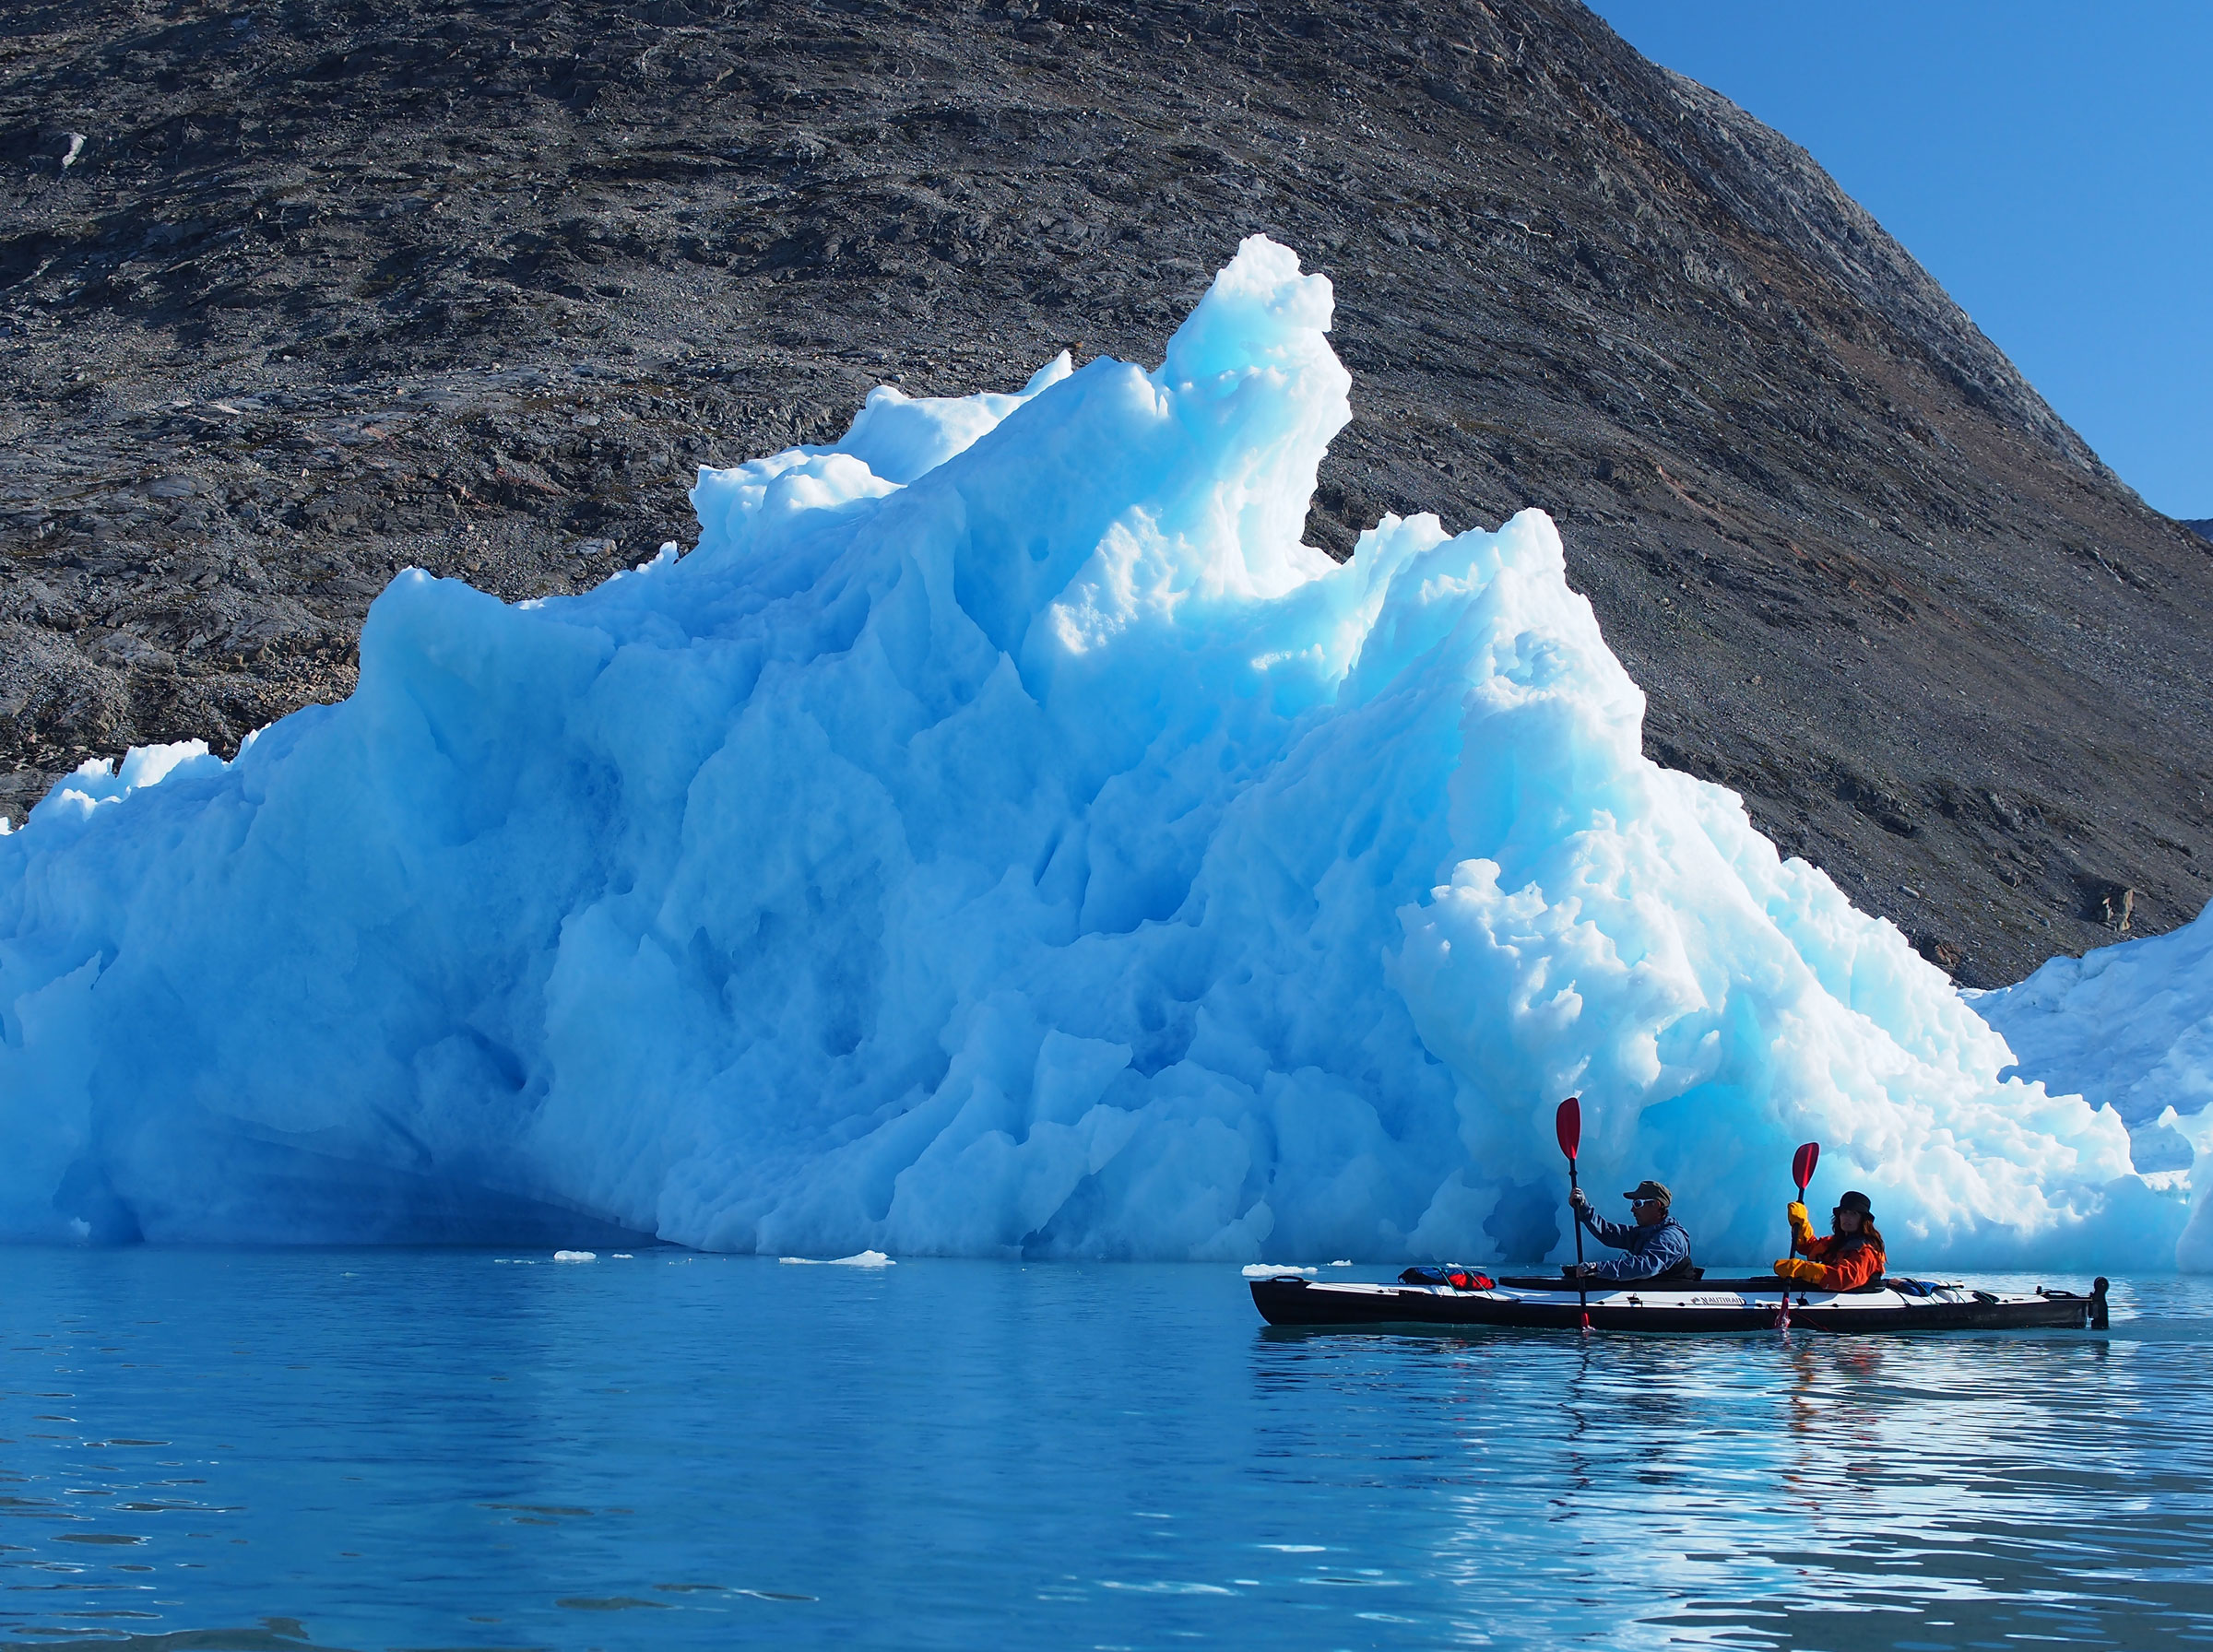 kayak-iceberg-greenland-250880.jpg - JPEG - 1010.2 ko - 2400×1792 px